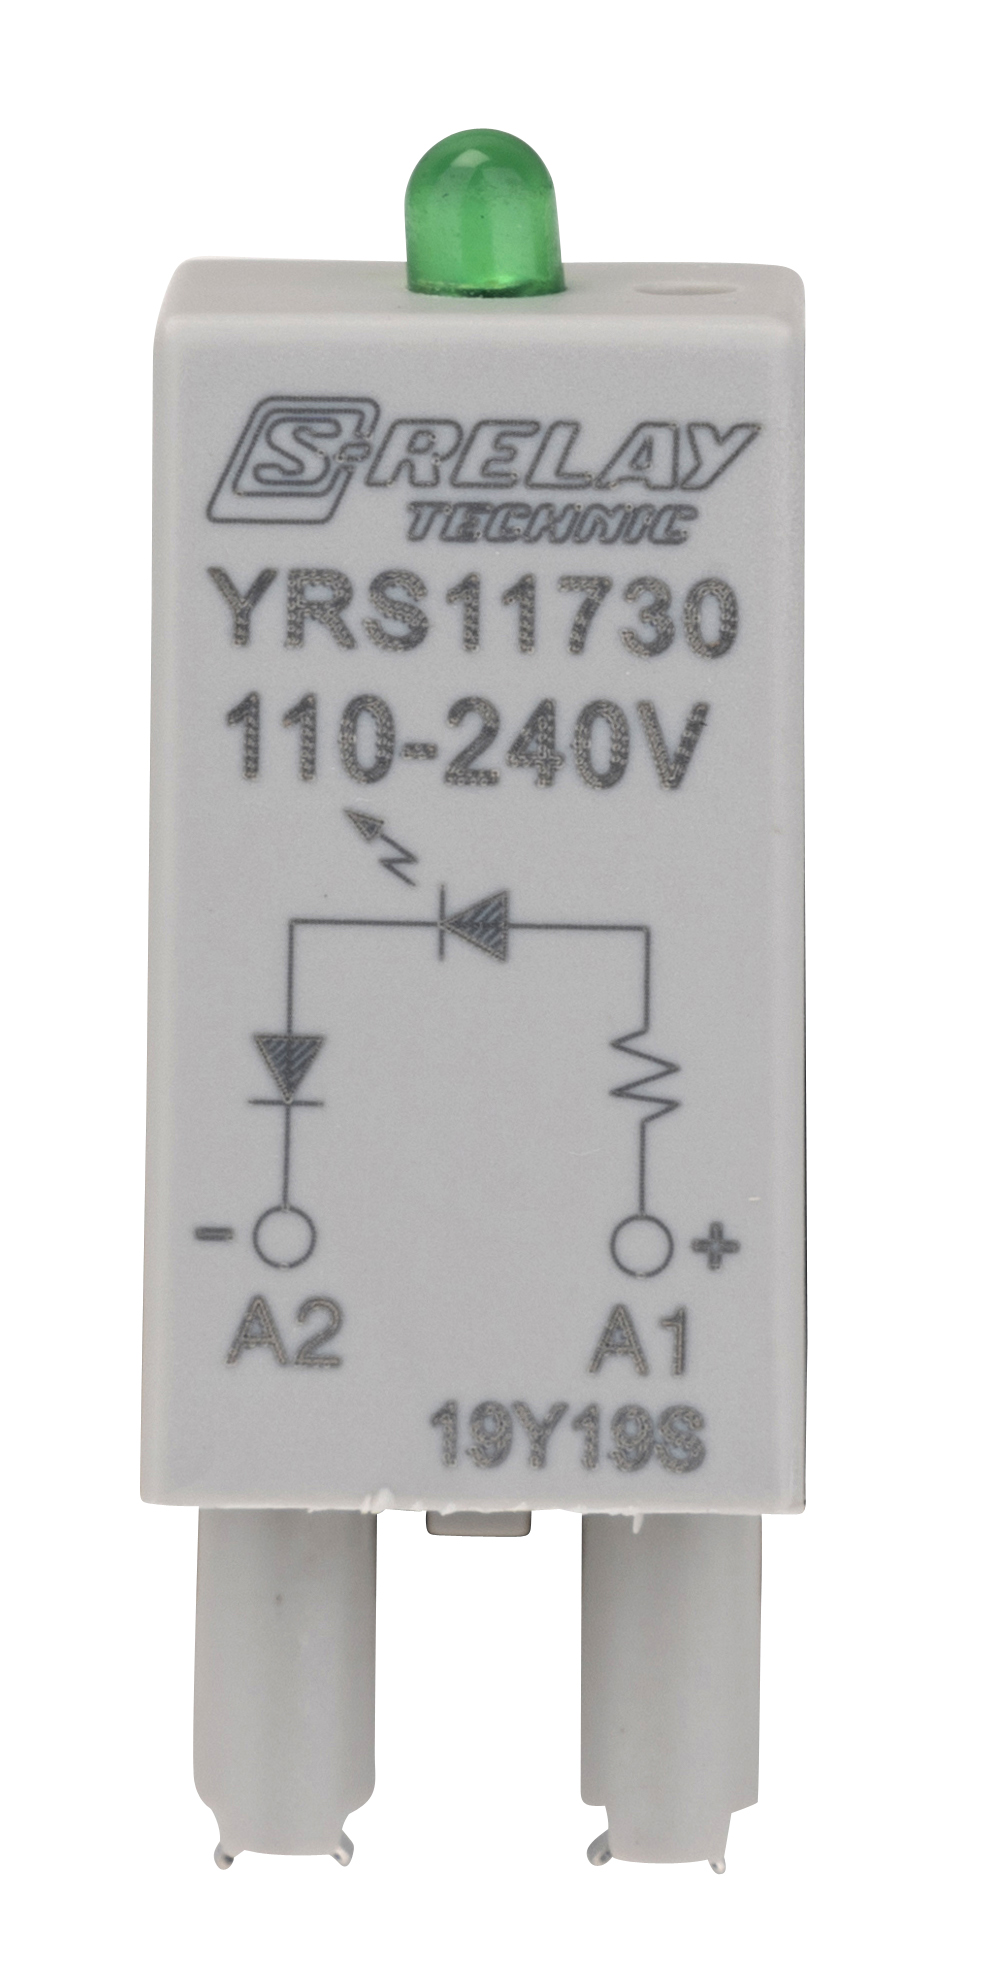 Foto: LED-Steckmodul, grün, 110-240VAC für S-Relay Sockel (c) Schrack